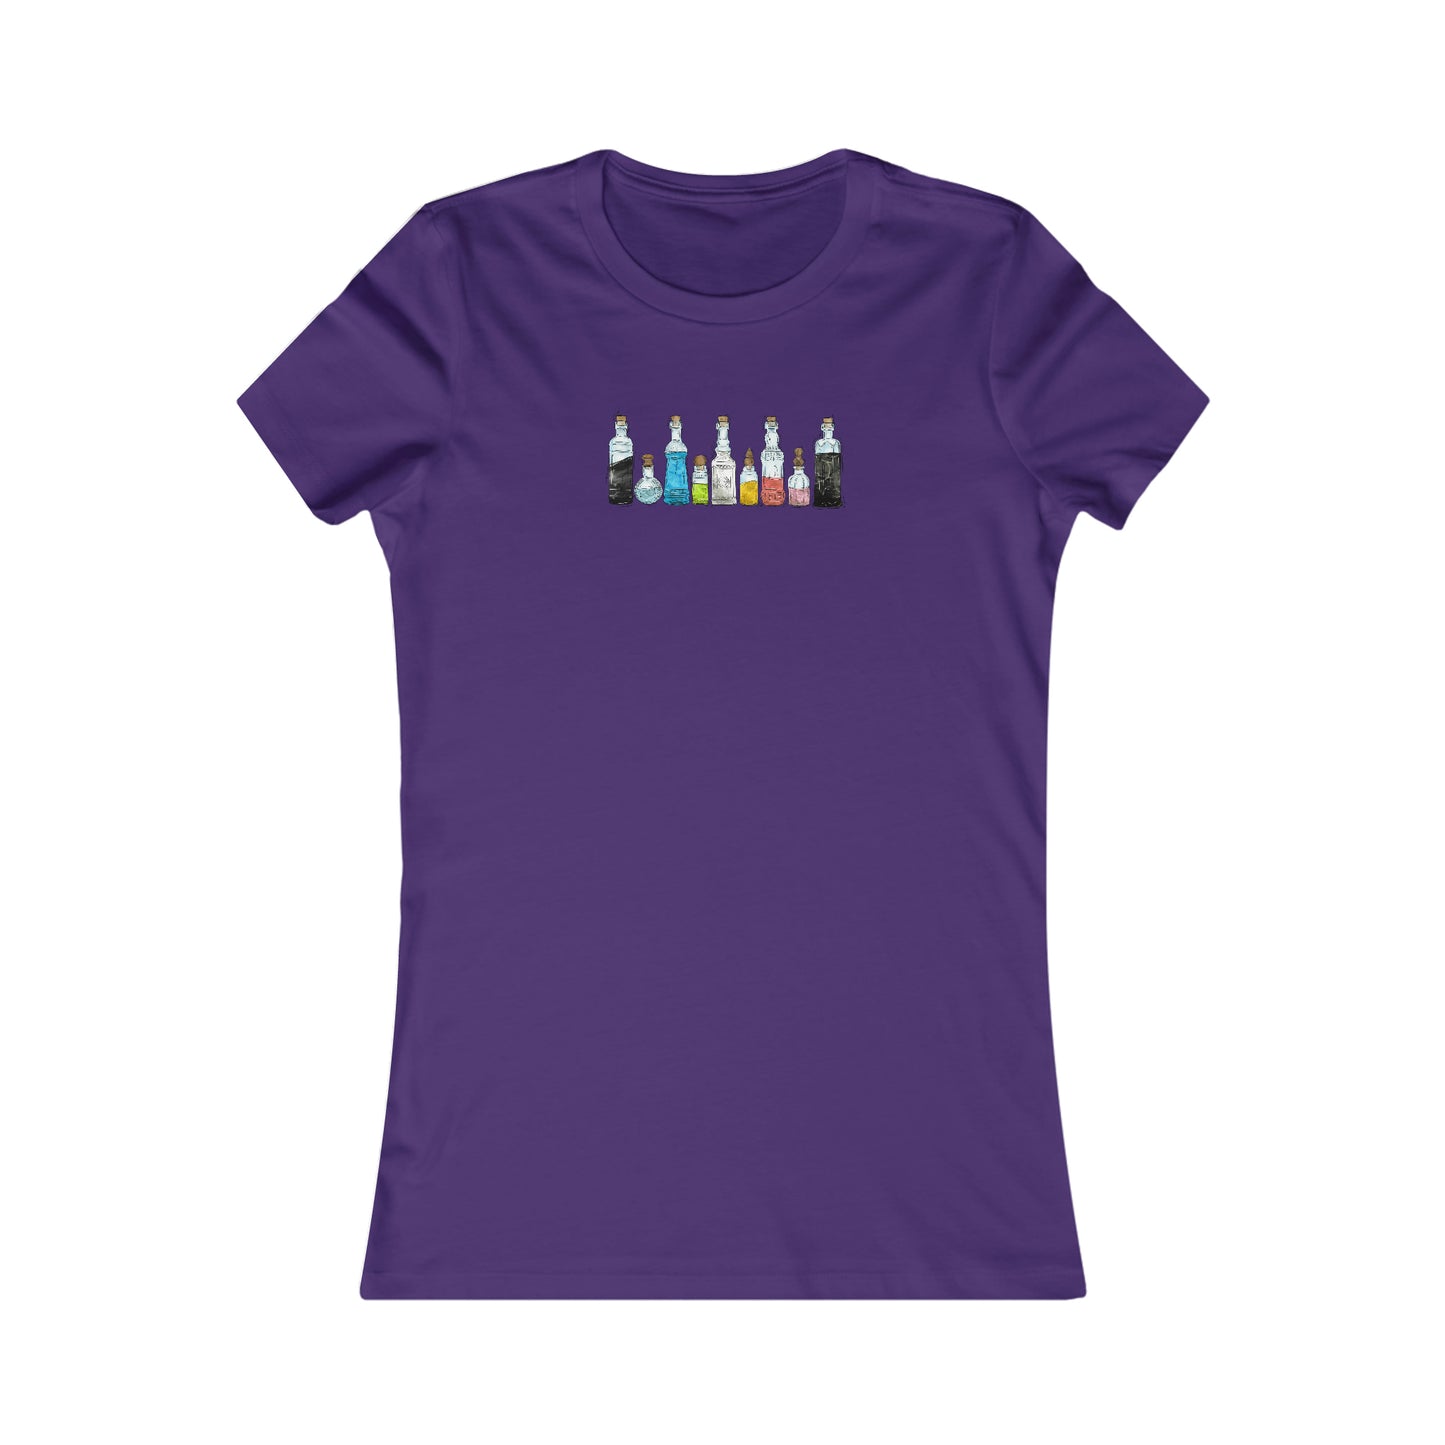 Queer Pride Potion Bottles - Women's T-Shirt